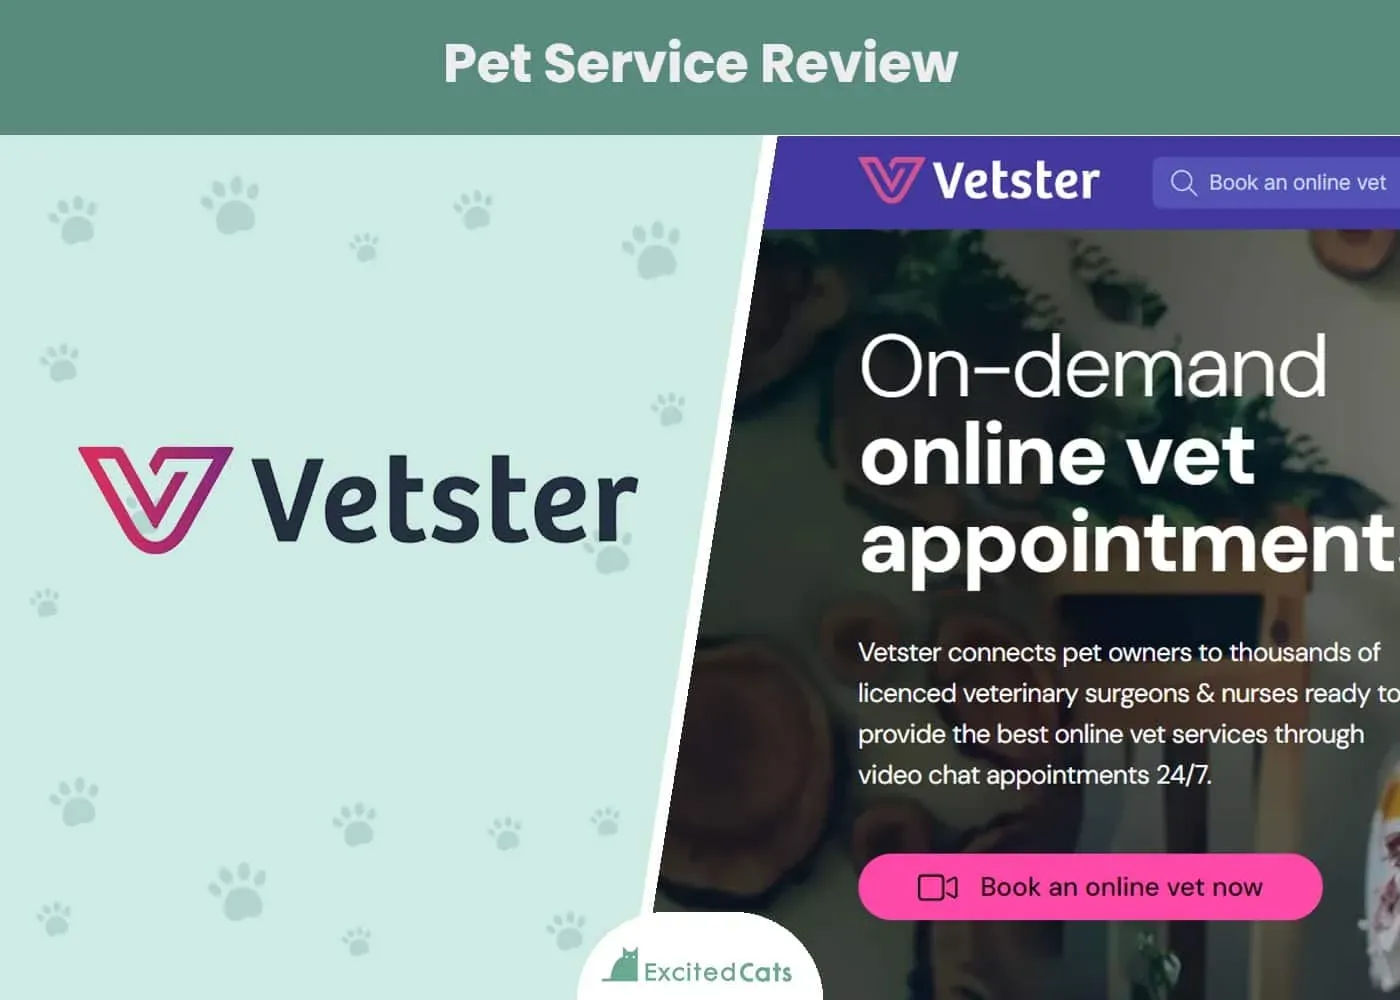 https://images.vetster.com/vetster_Pet_Service_Review_SAPRFTIMG_d4739ba2b6.webp